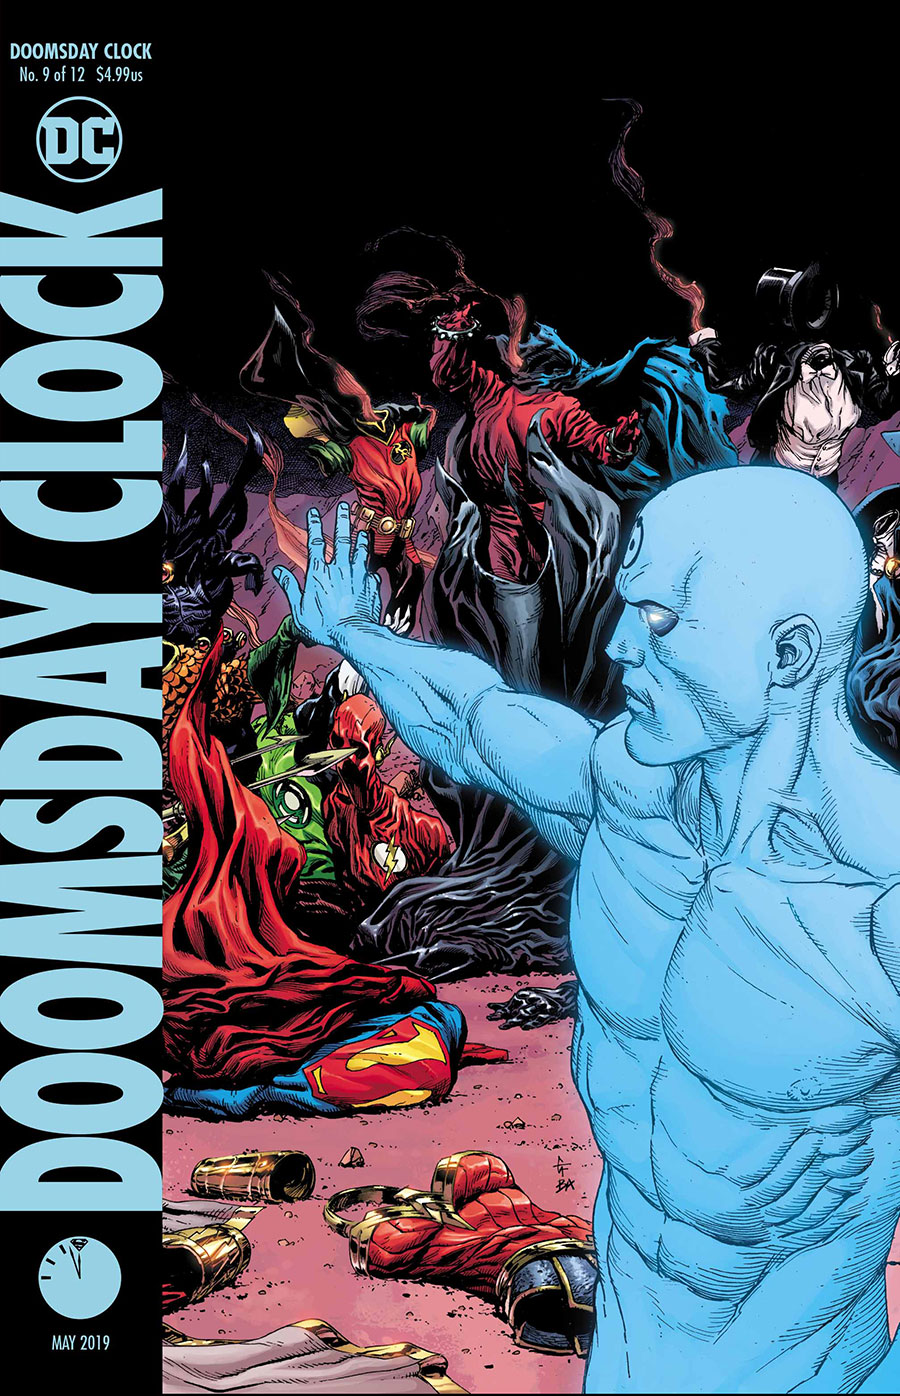 Doomsday Clock 9 Variant - DC Comics News